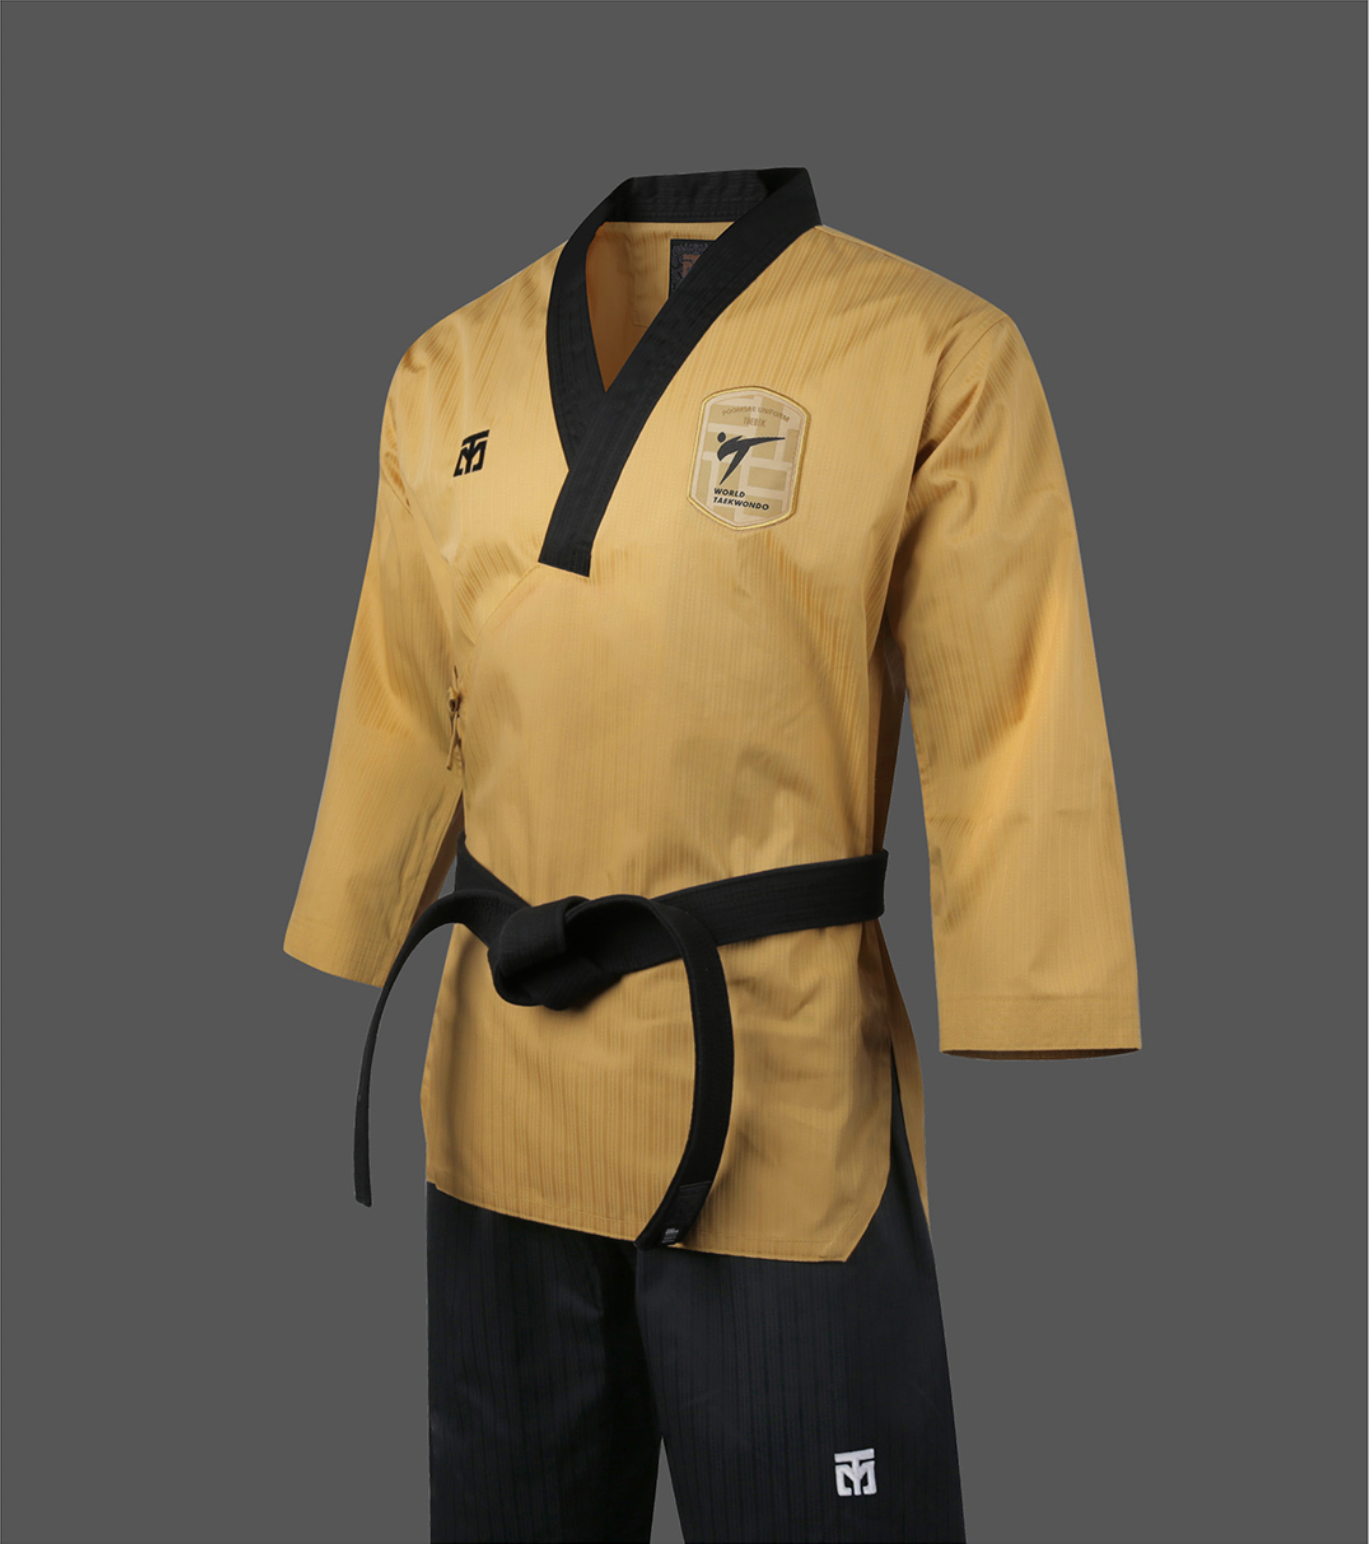 TAEBEK Poomsae Uniform Special Patch Edition (High Dan)